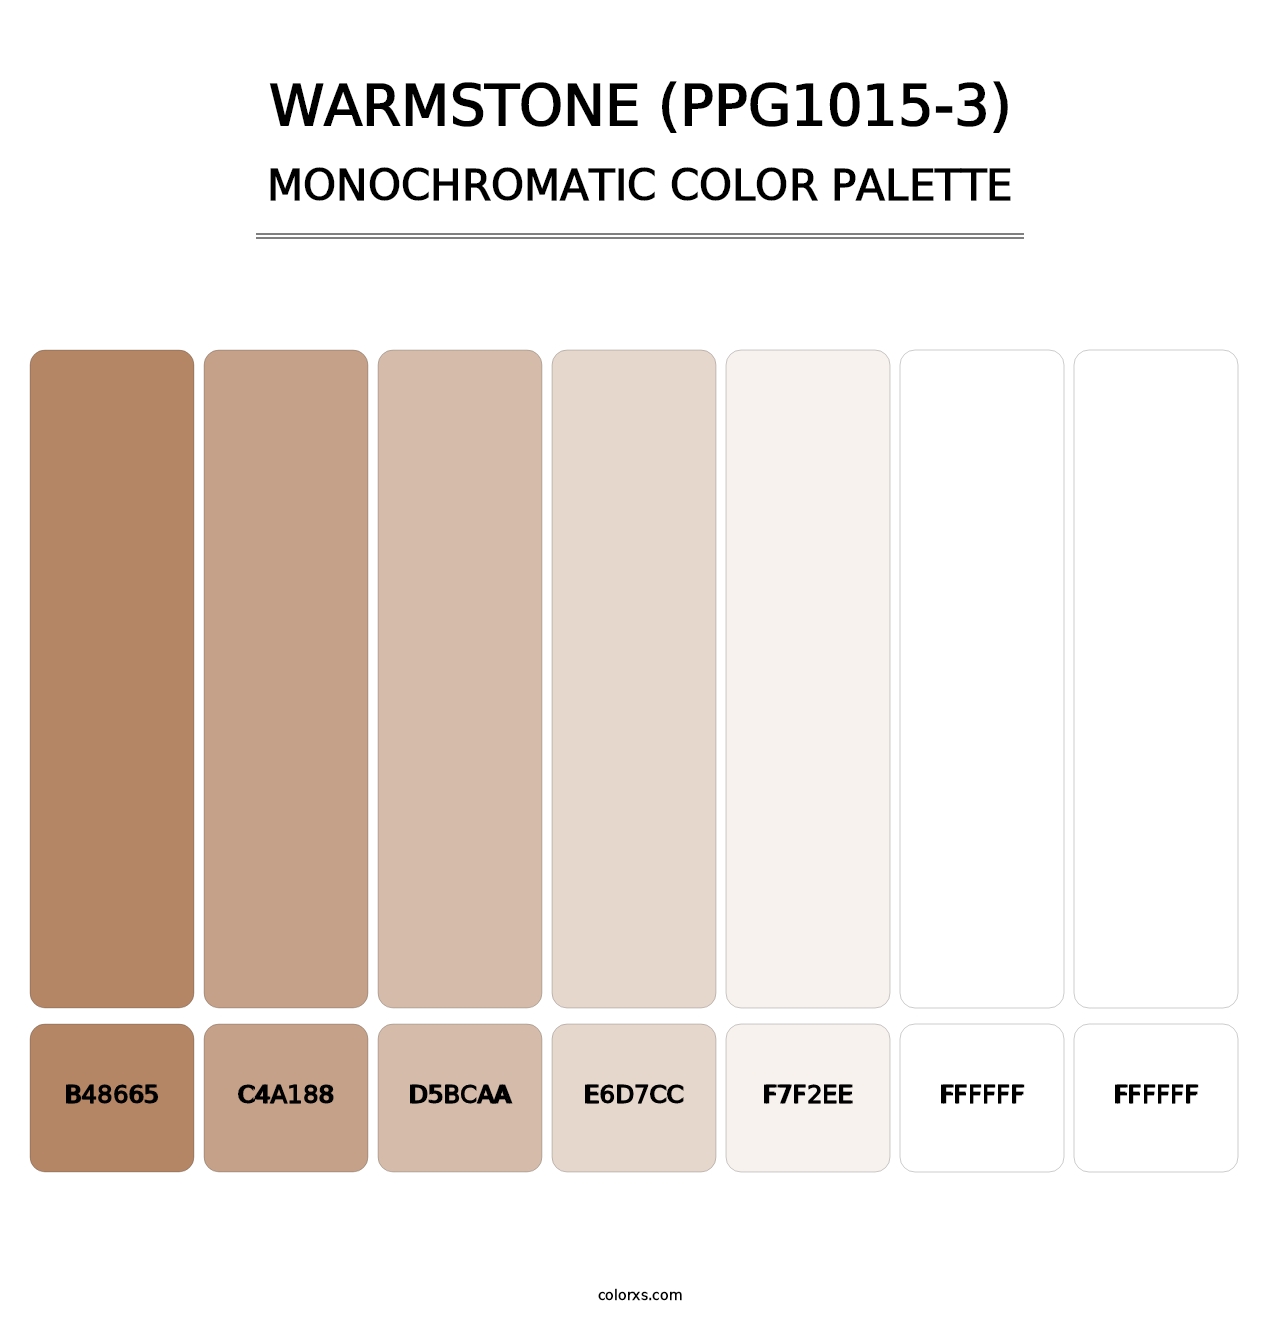 Warmstone (PPG1015-3) - Monochromatic Color Palette